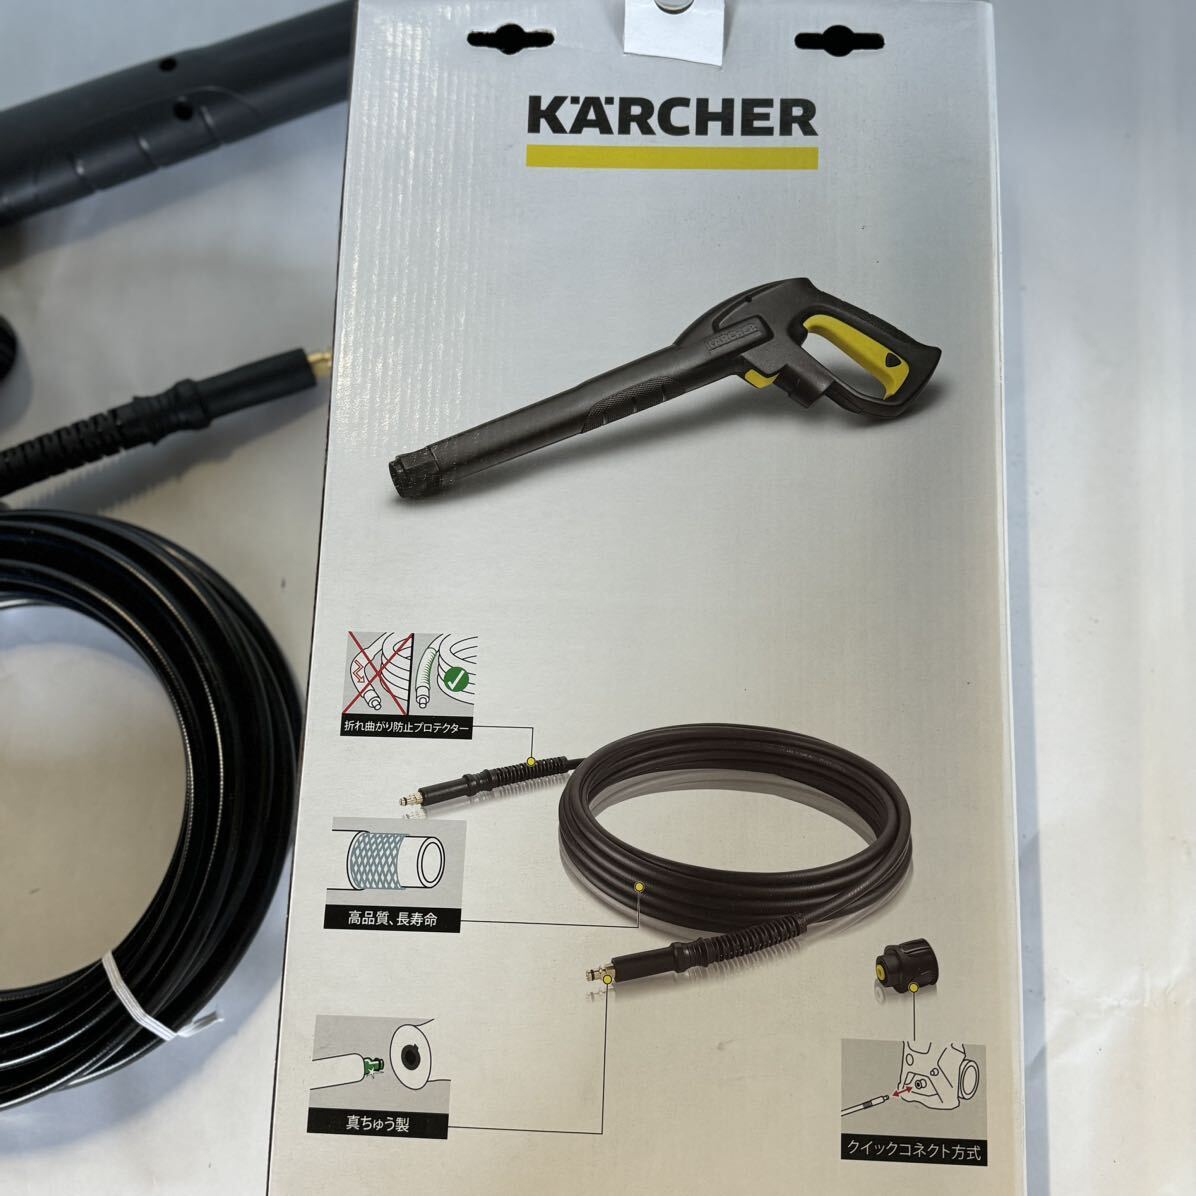 KARCHER (ケルヒャー 家庭用高圧洗浄機 アクセサリー クイックコネクトキット 7.5m )[H67]の画像3